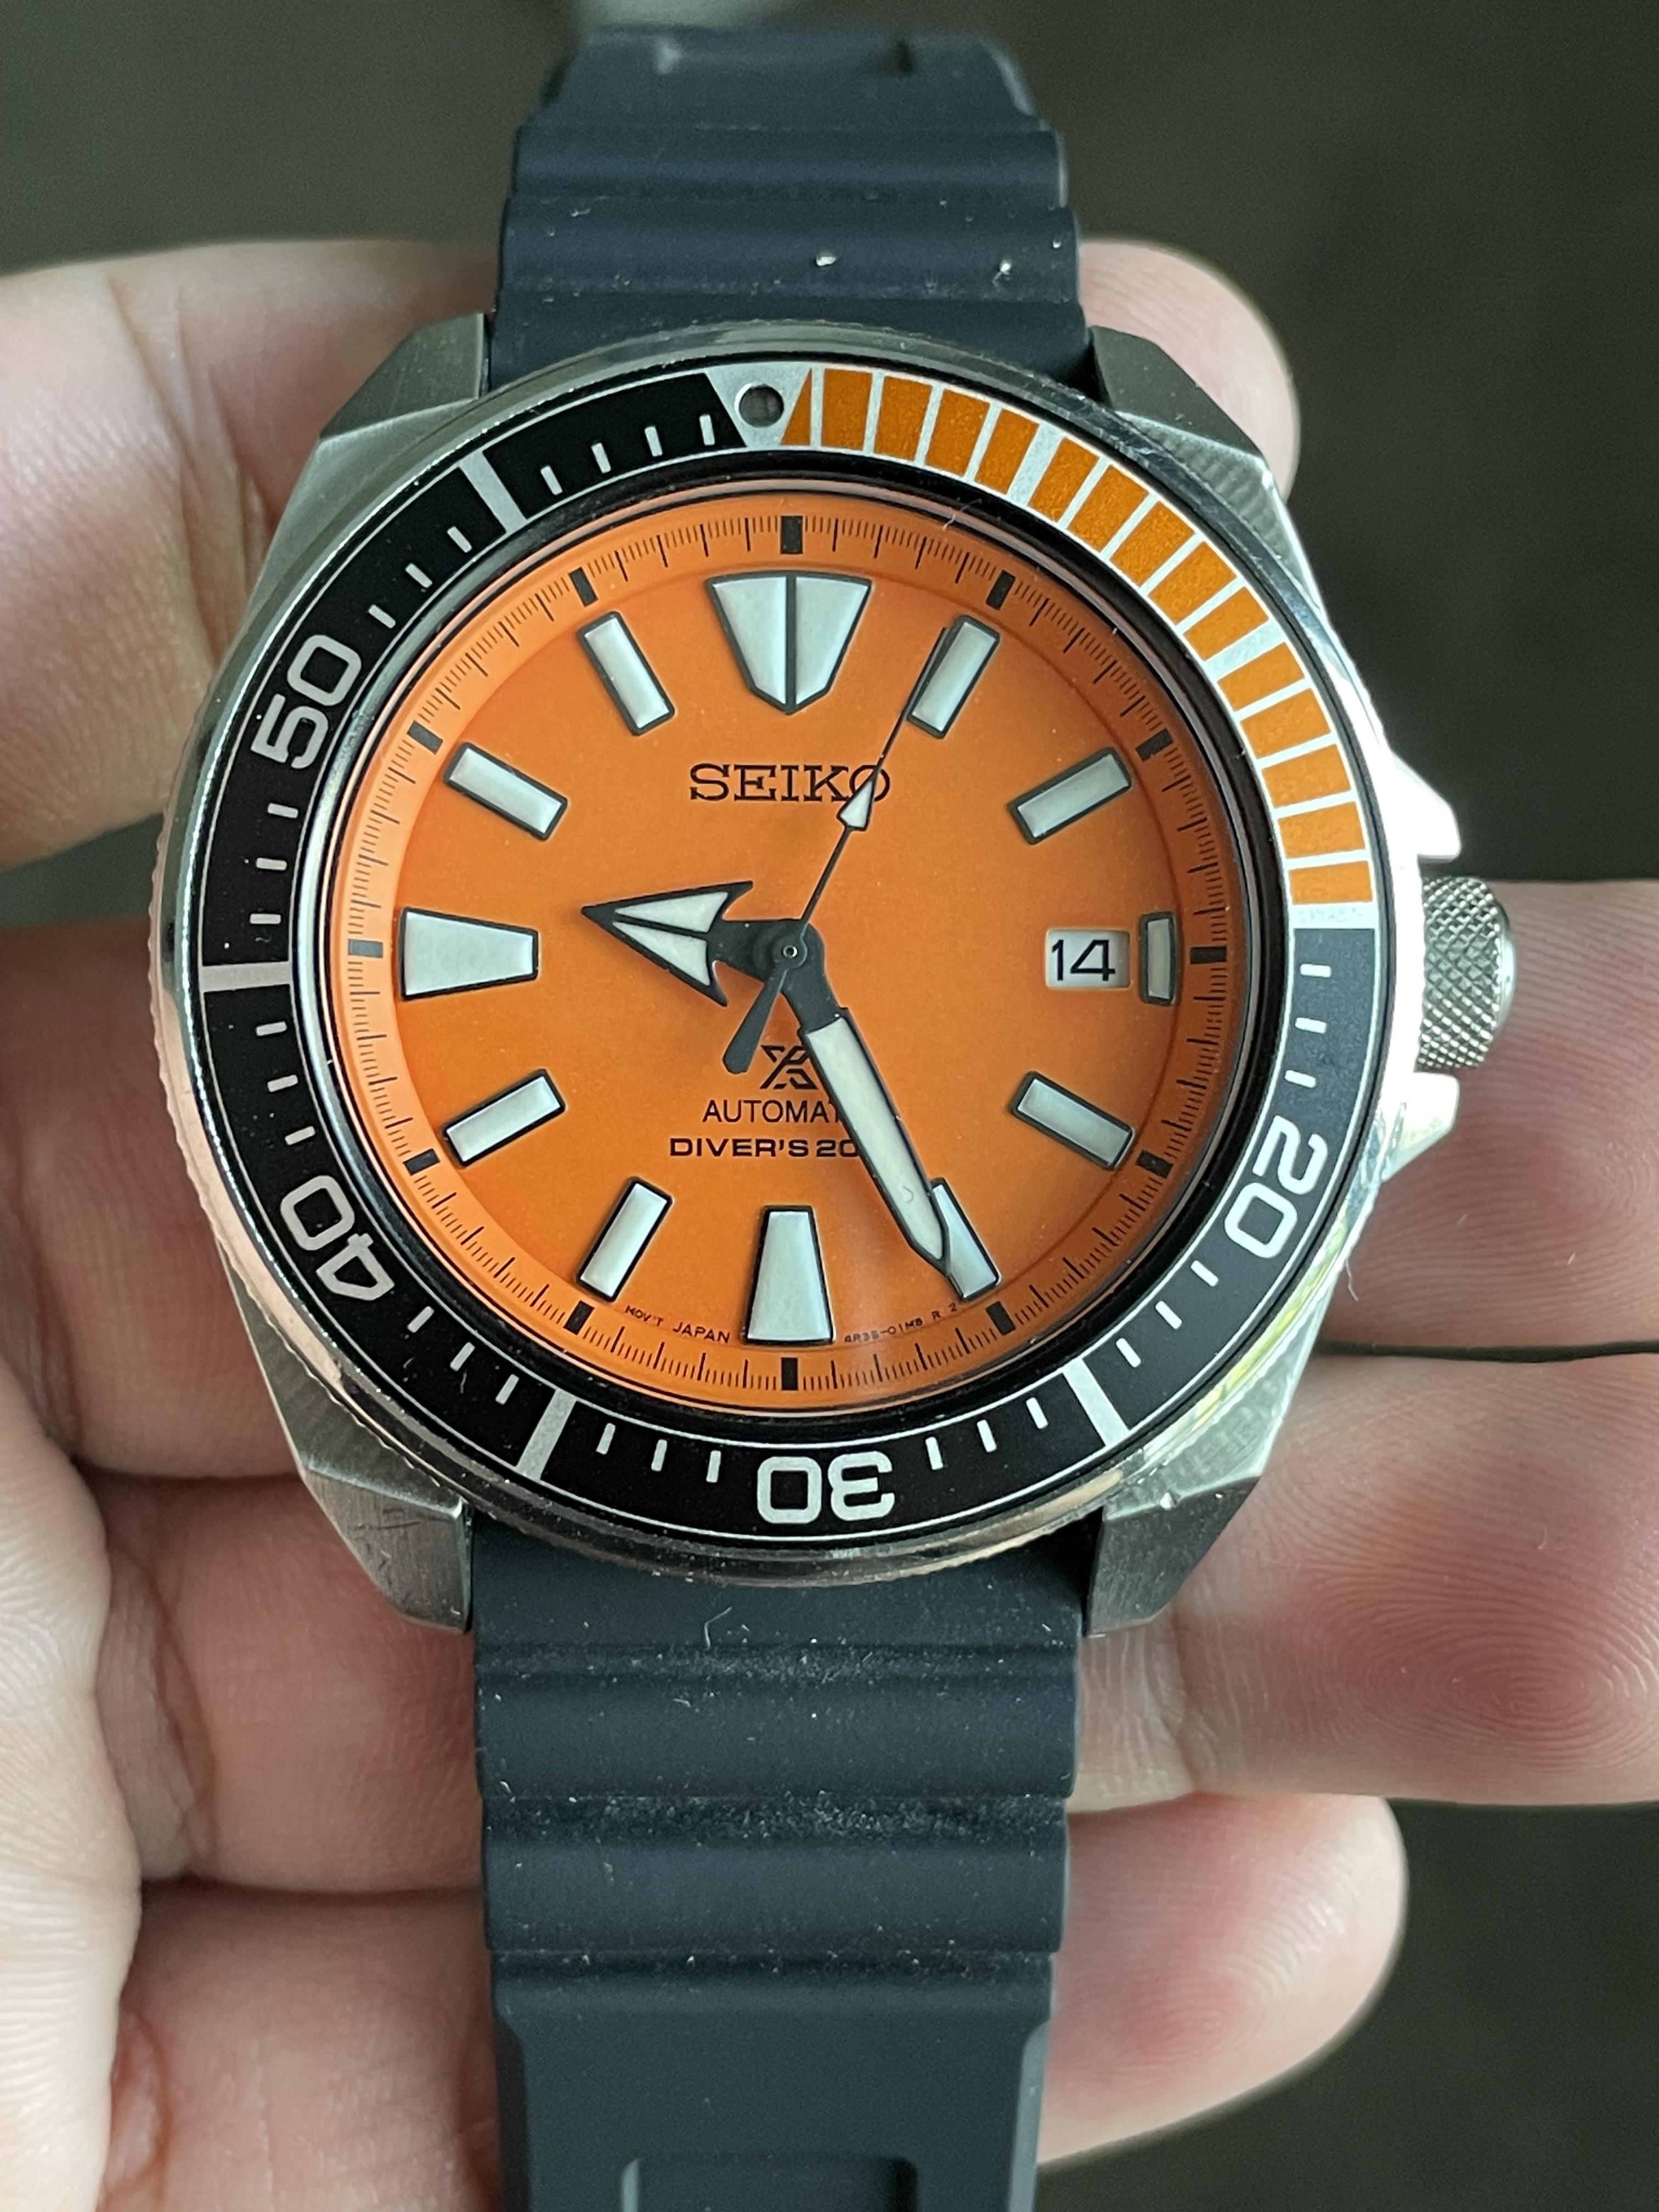 WTS] Seiko Samurai Orange SRPC07 in great condition $275 | WatchCharts